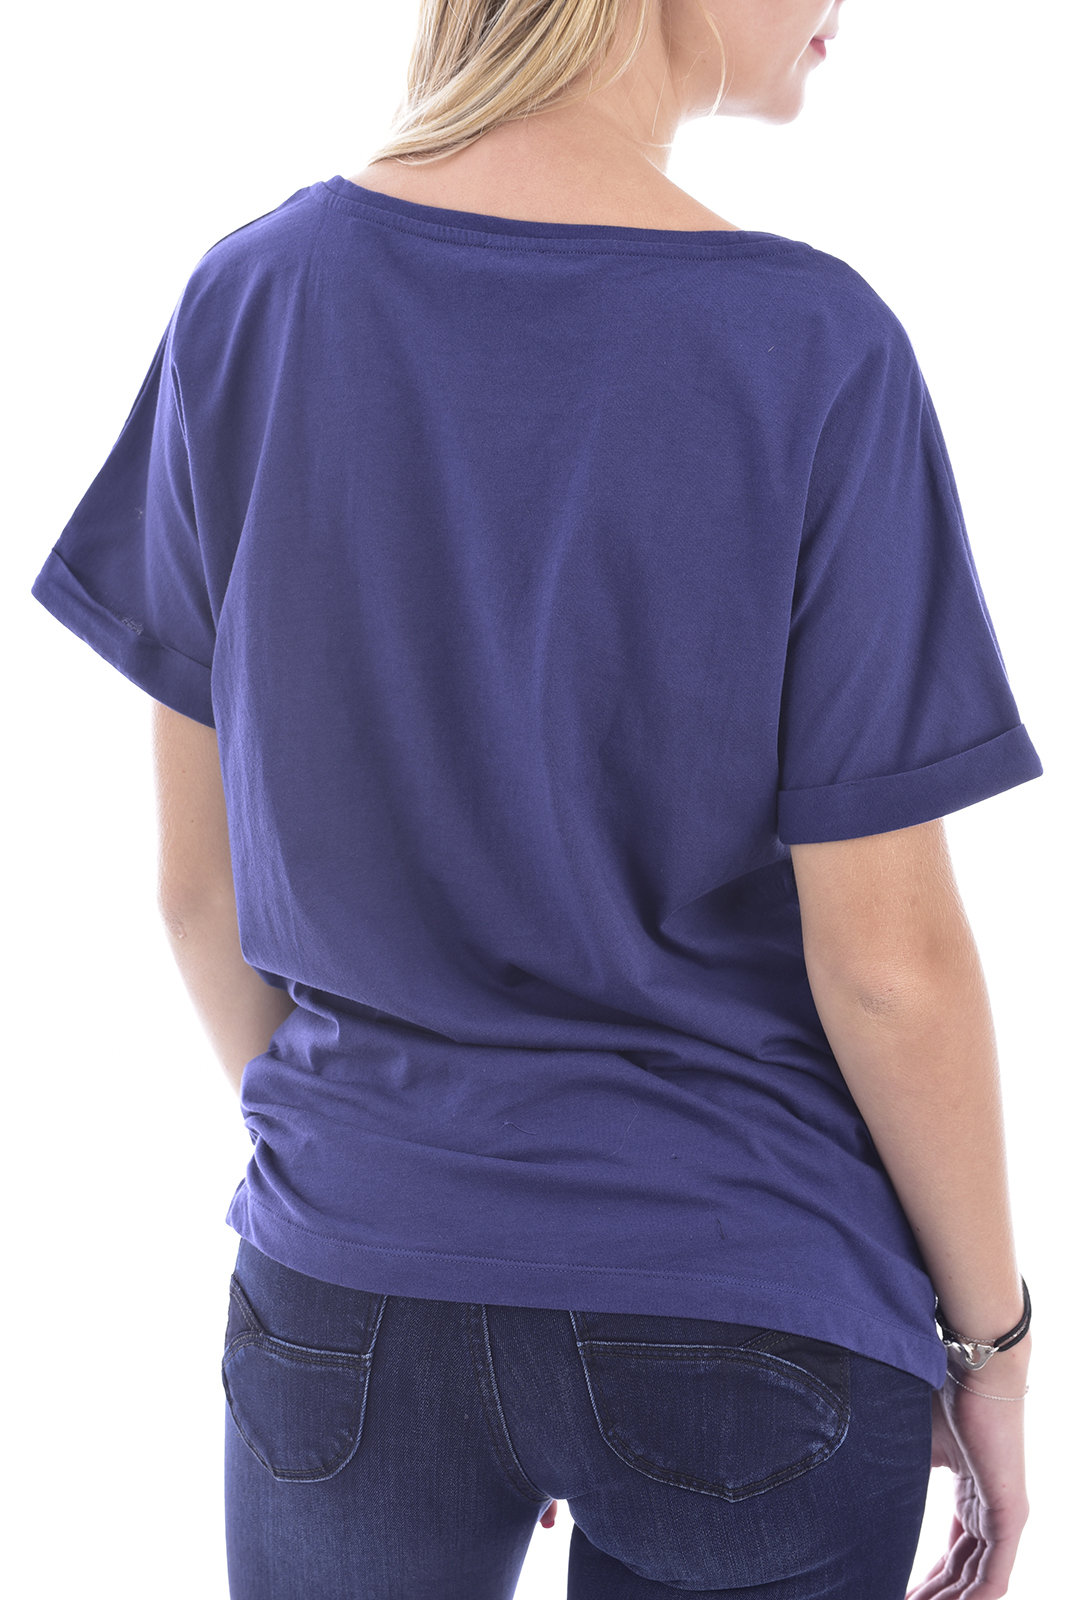 Tee-shirt bleu à manches courtes femme Emporio Armani - 164340